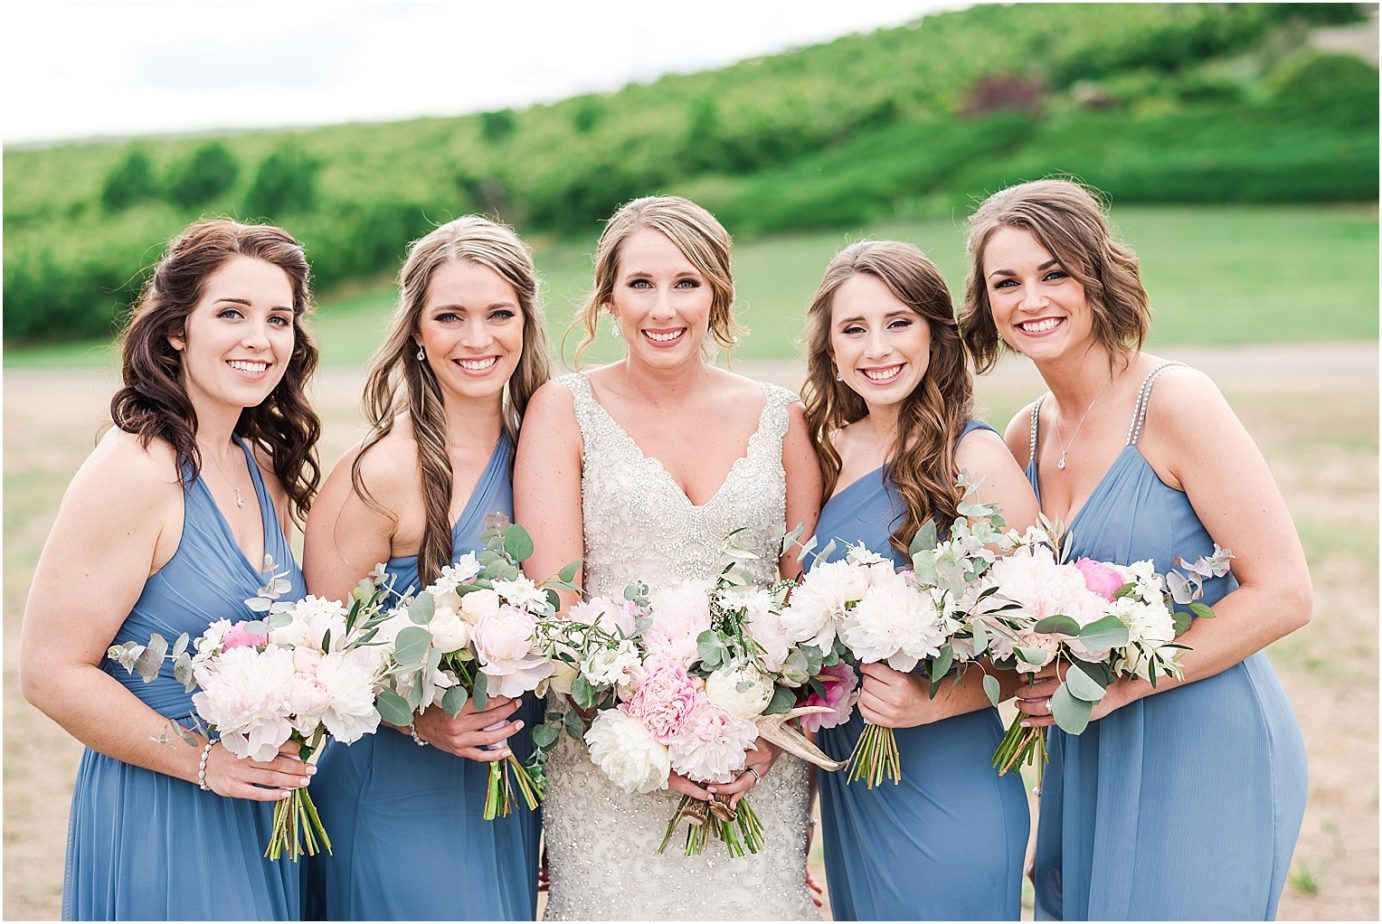 Favorite wedding florals of 2018 for brides blush and beige wedding bouquets